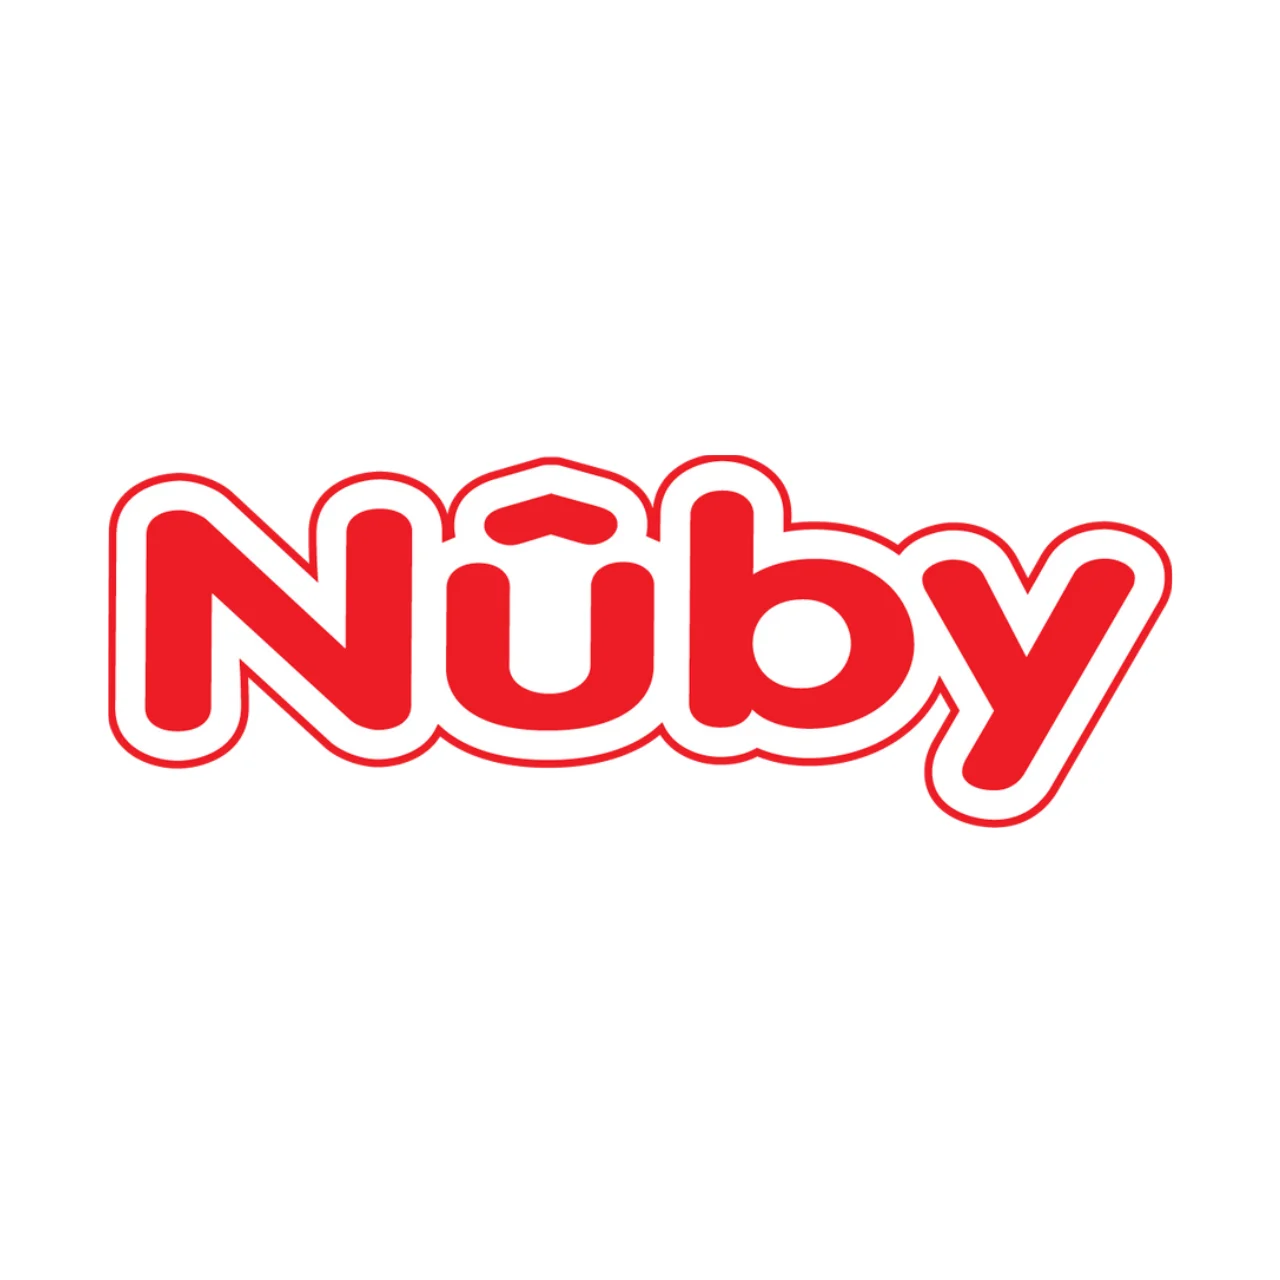 Logo Nuby